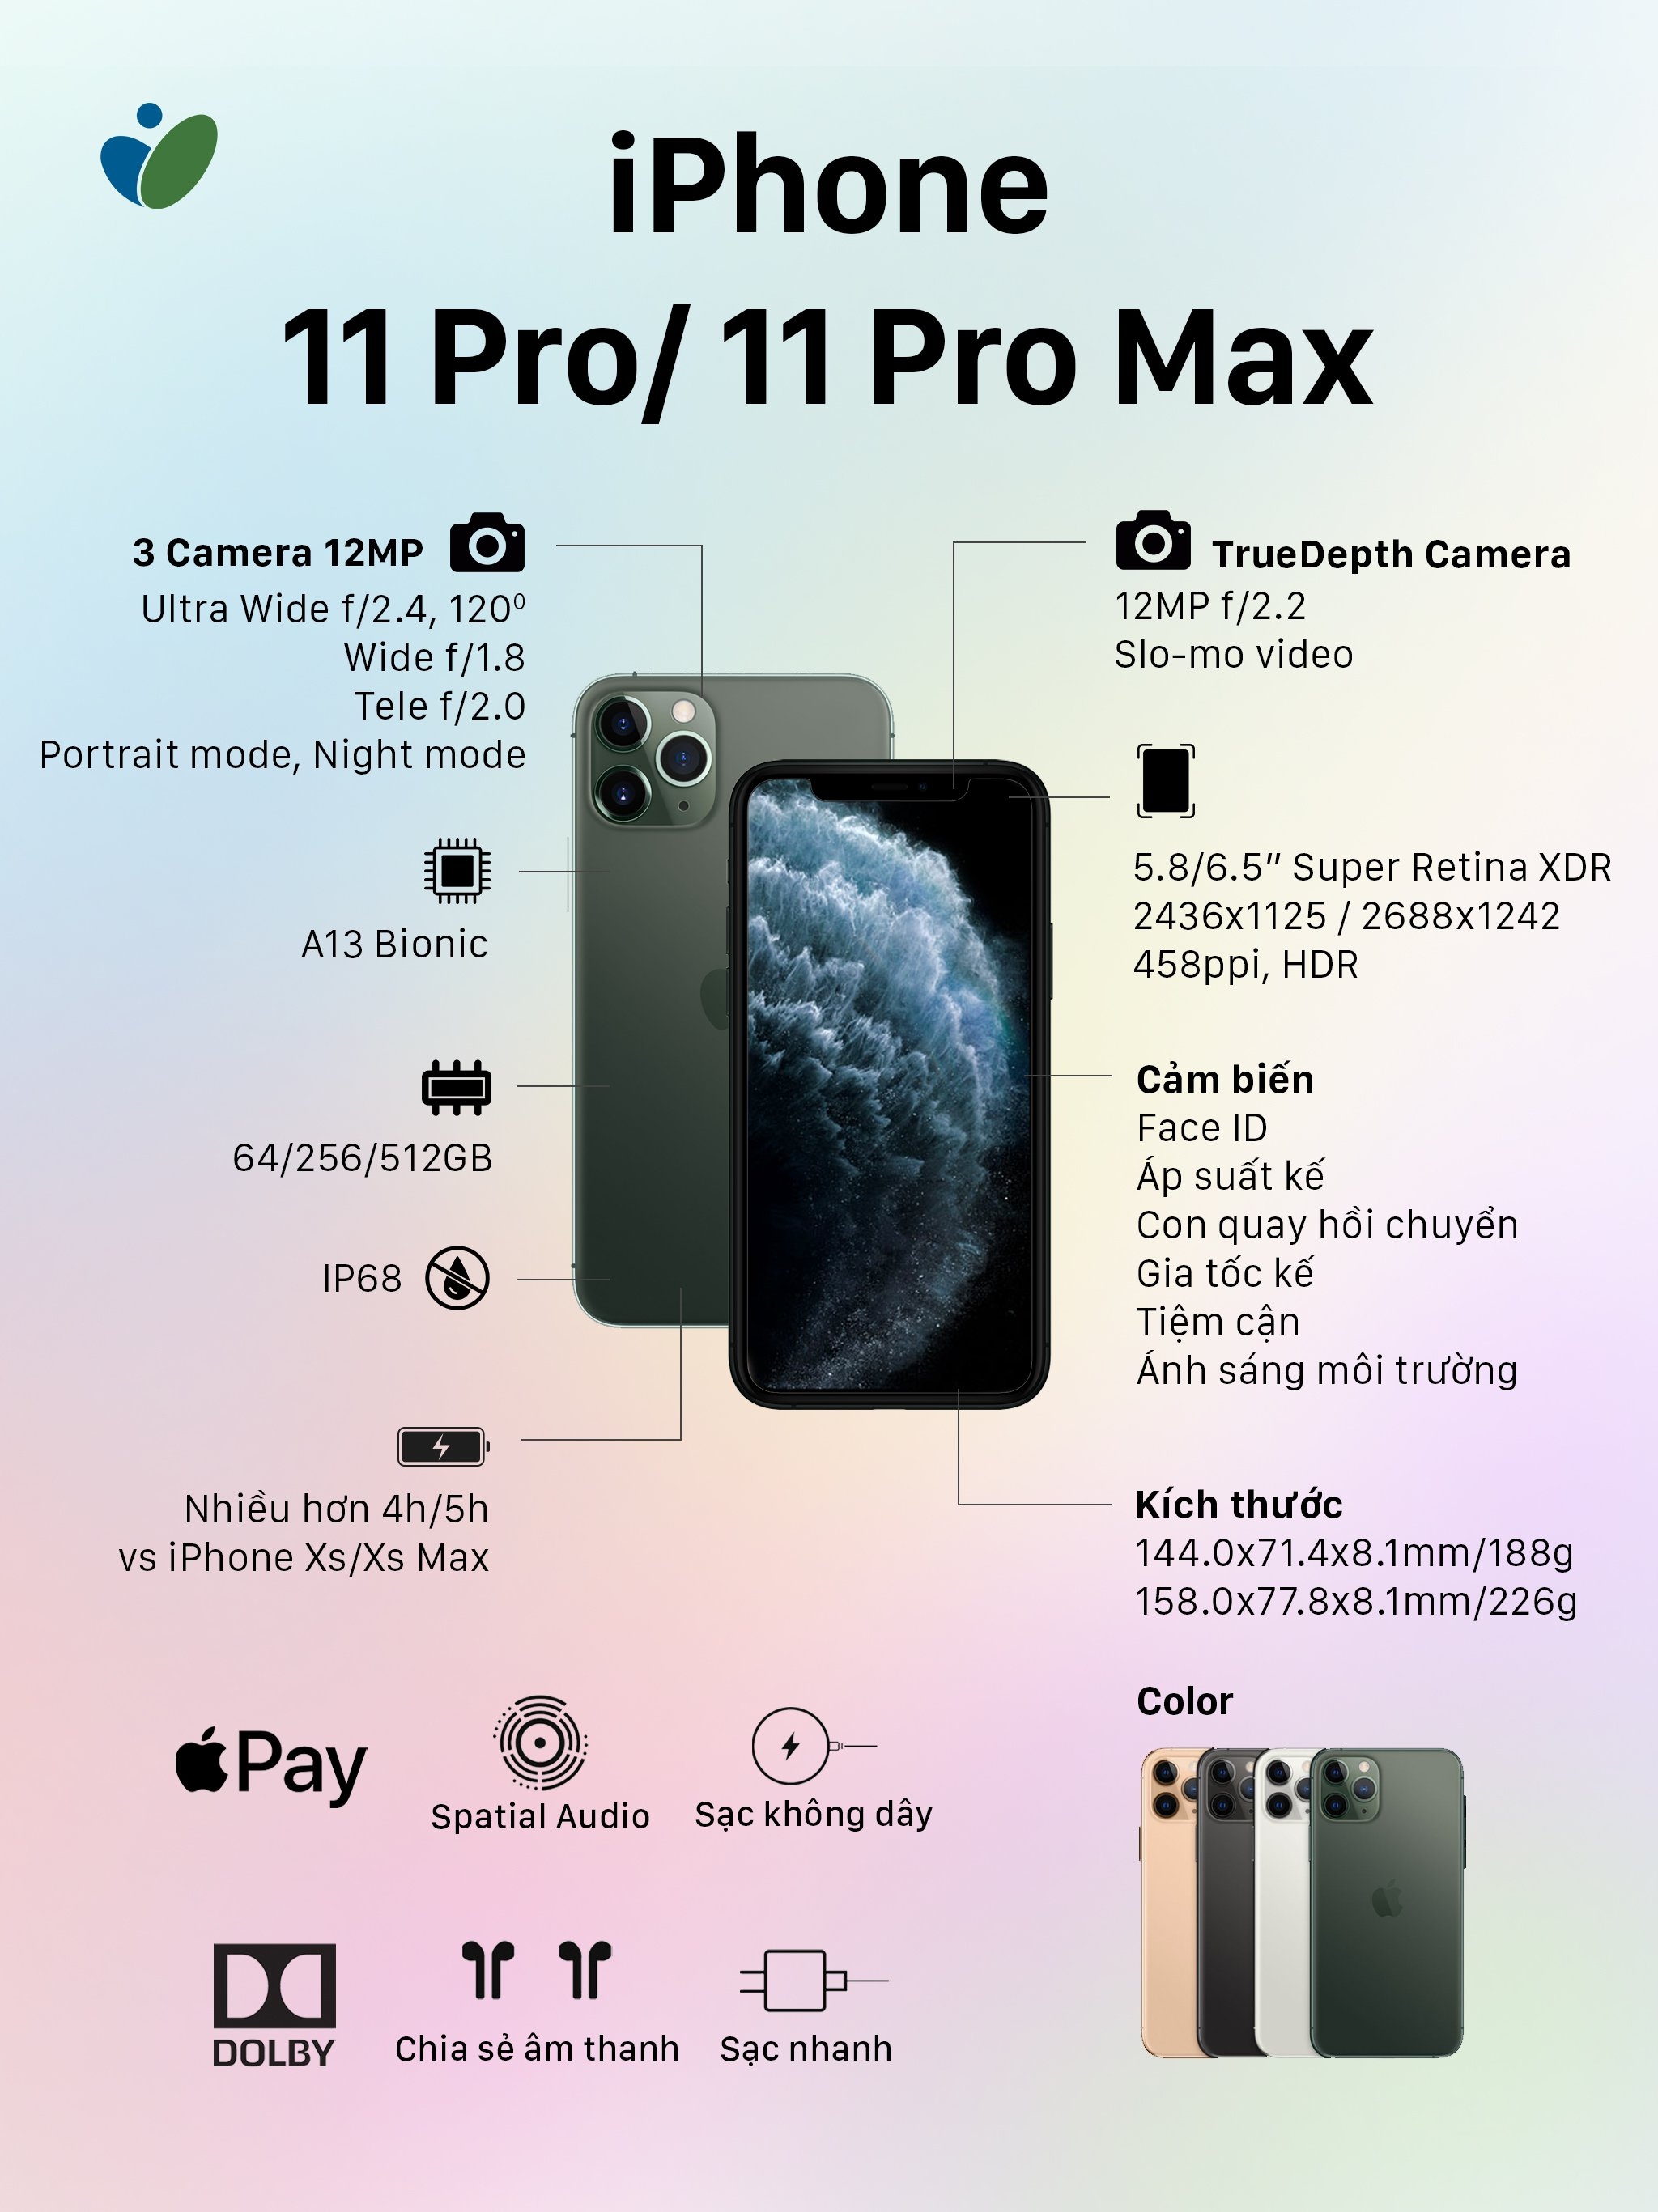 Айфон 13 какая память. Iphone 11 Pro Max. Iphone 11 Pro Pro Max. Айфон 11 Pro Max память. Iphone 11 Pro Max 128gb.